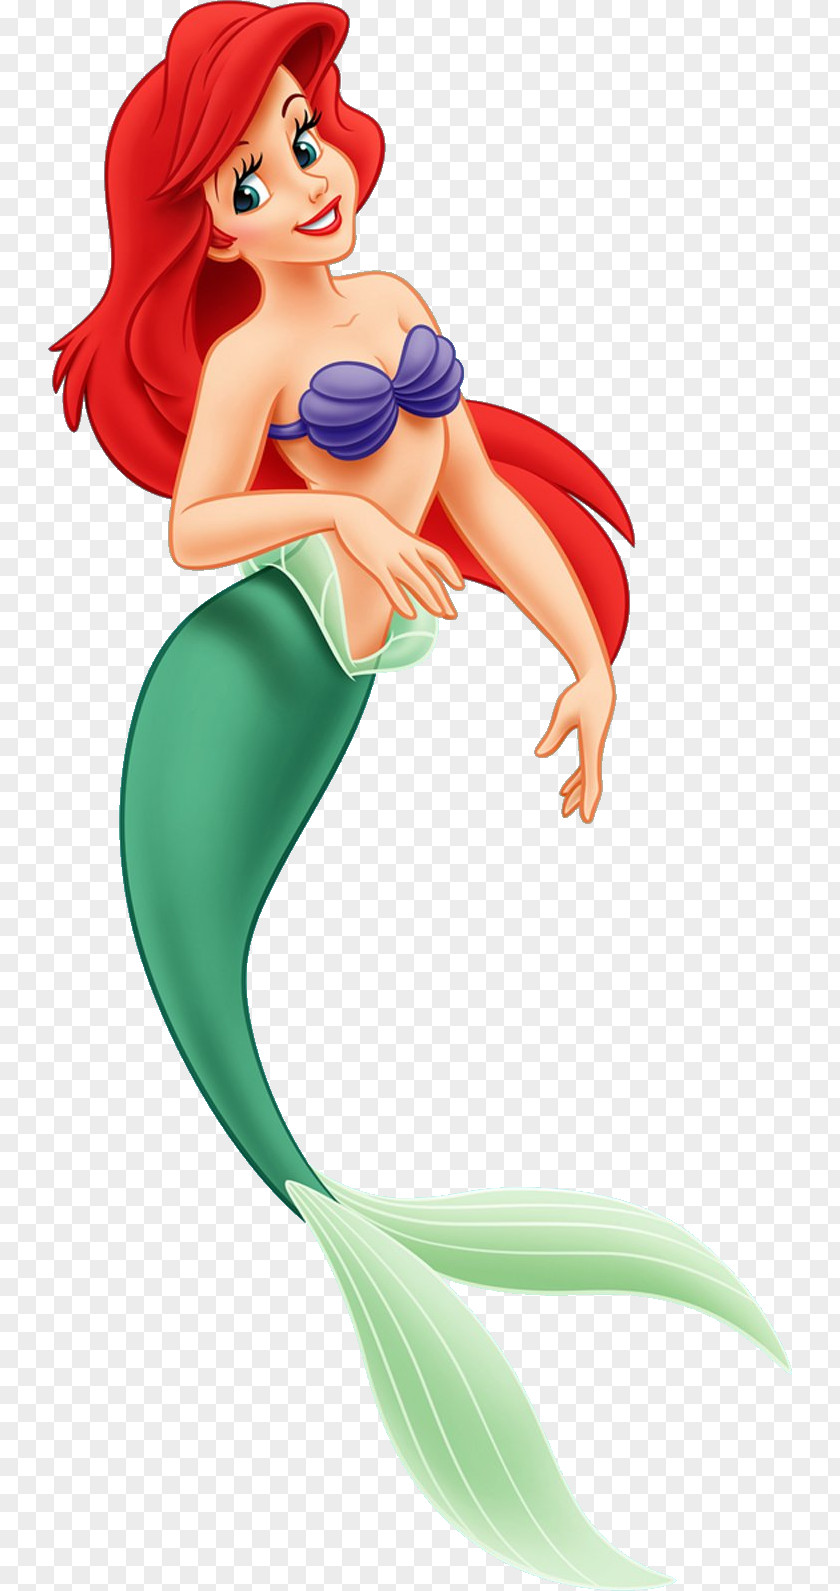 Little Mermaid Ariel The Ursula Character Disney Princess PNG